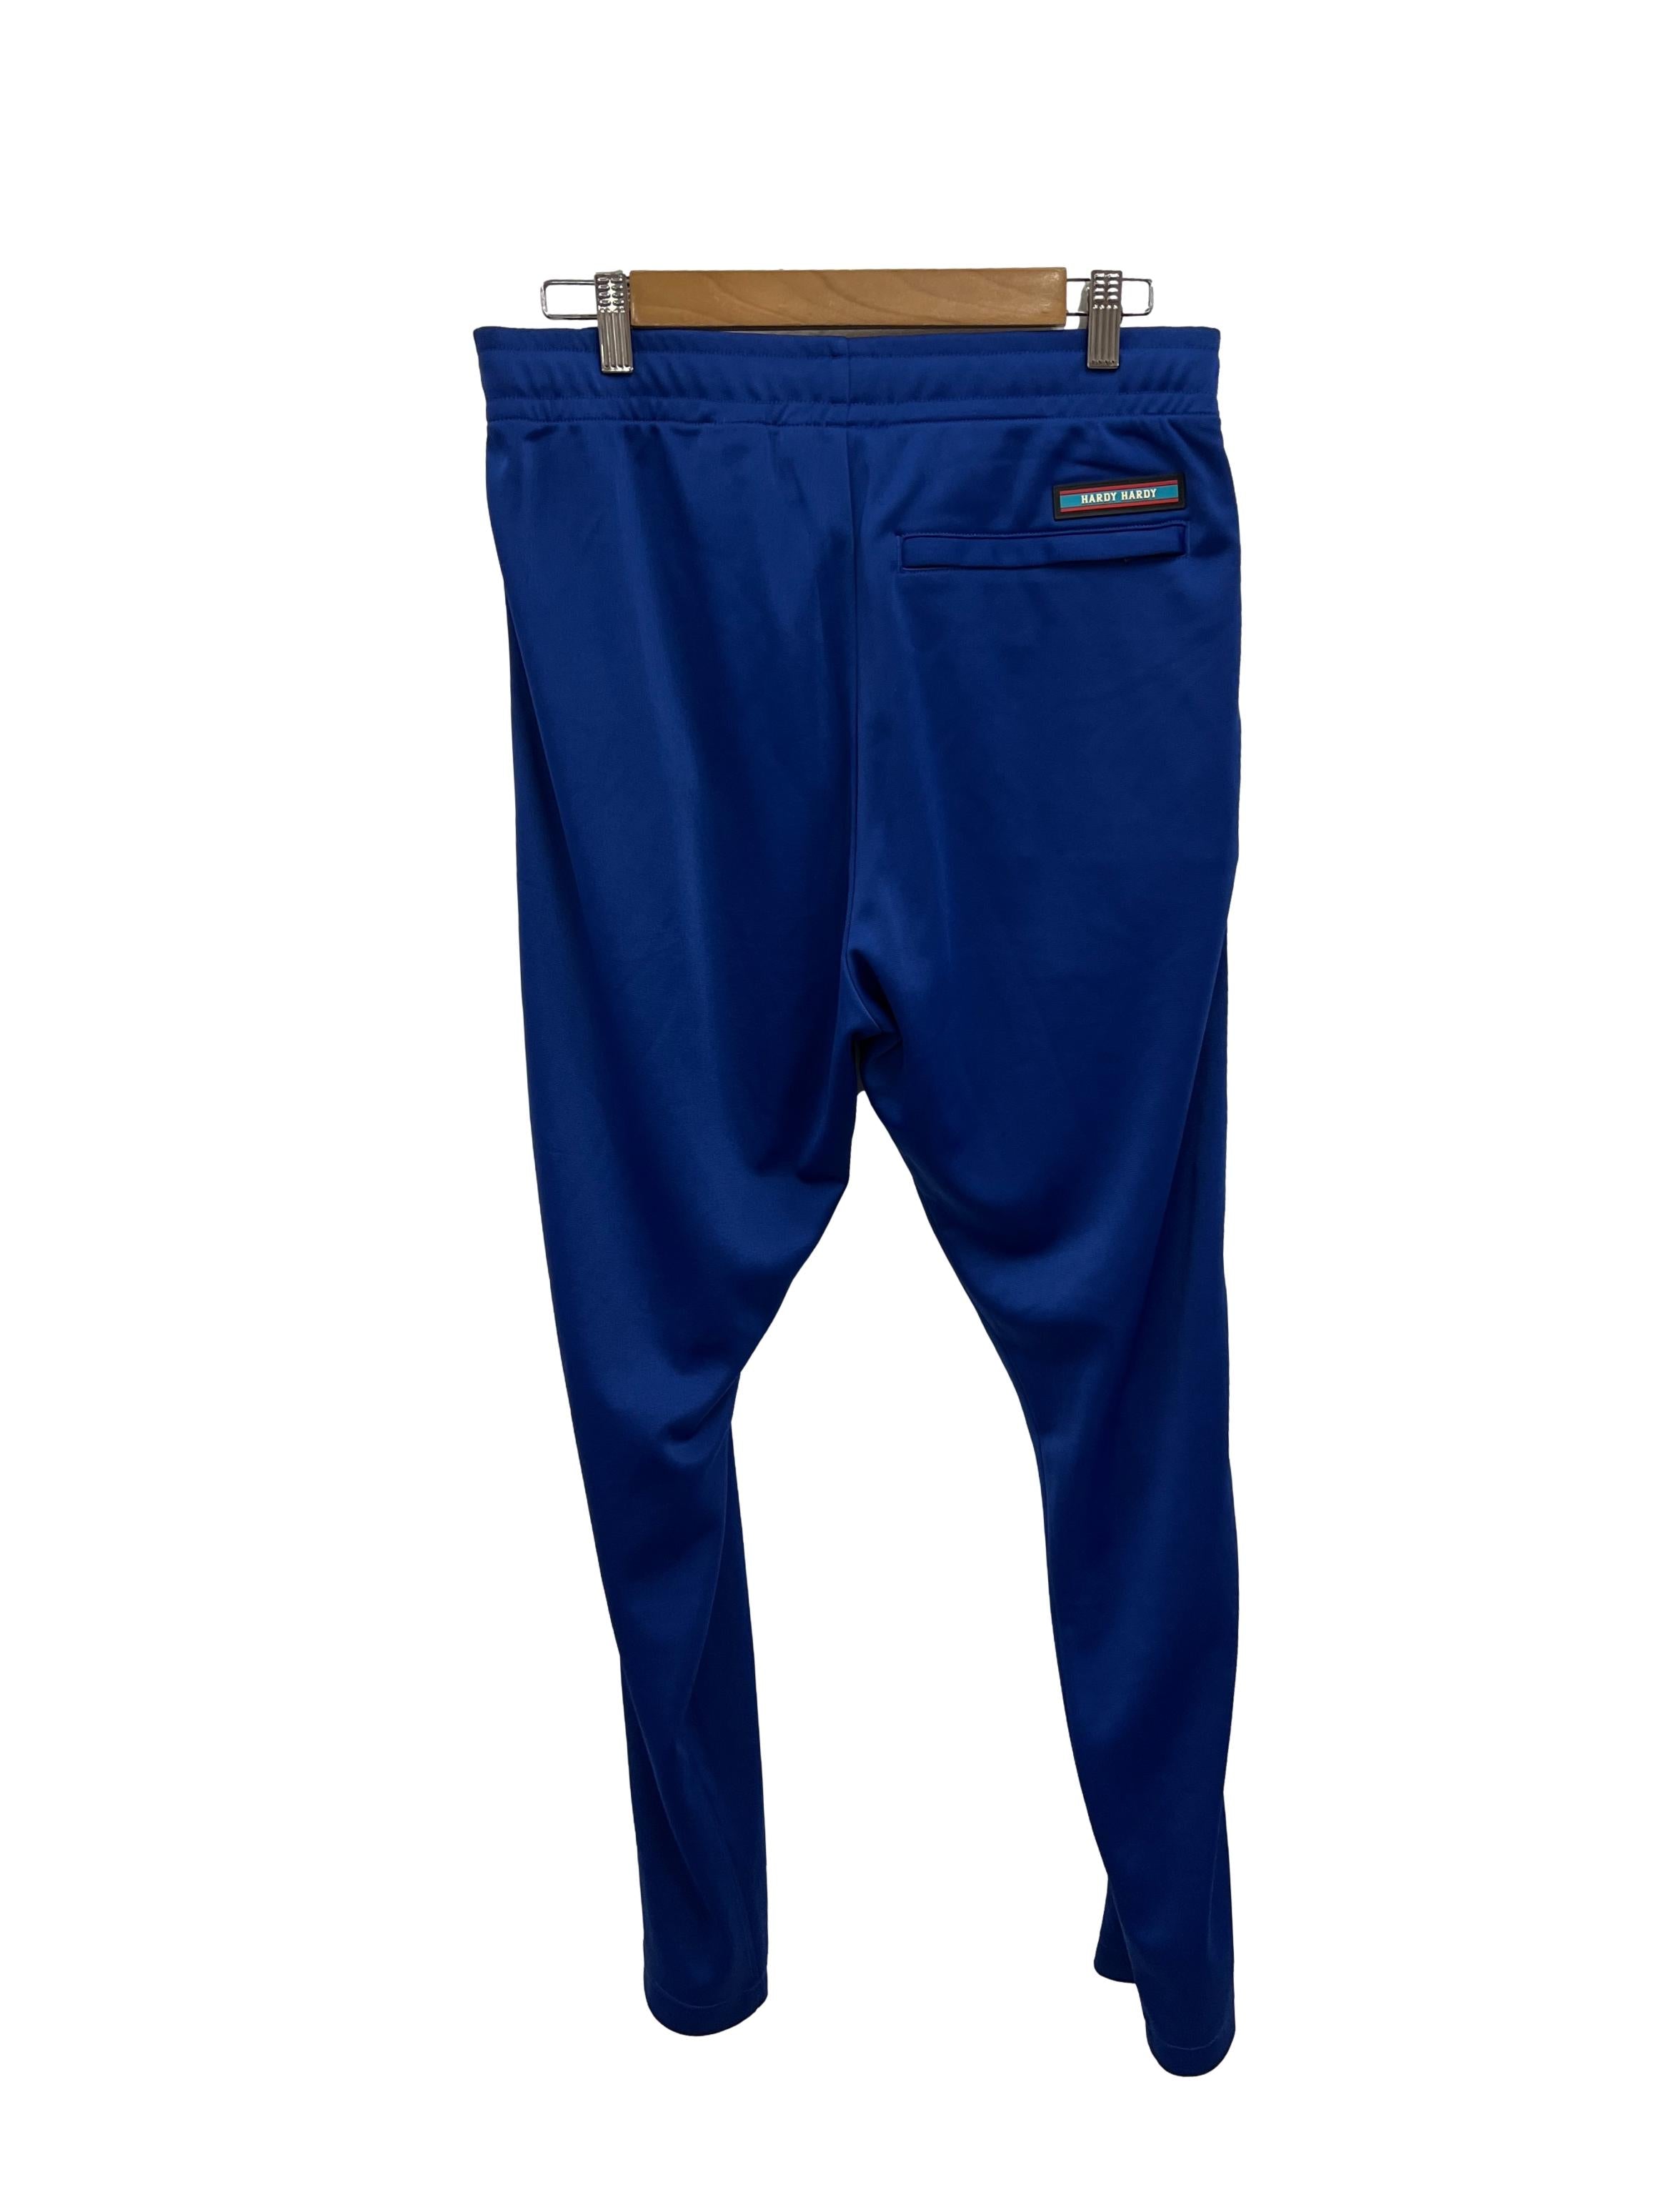 Cobalt Blue Sweatpants